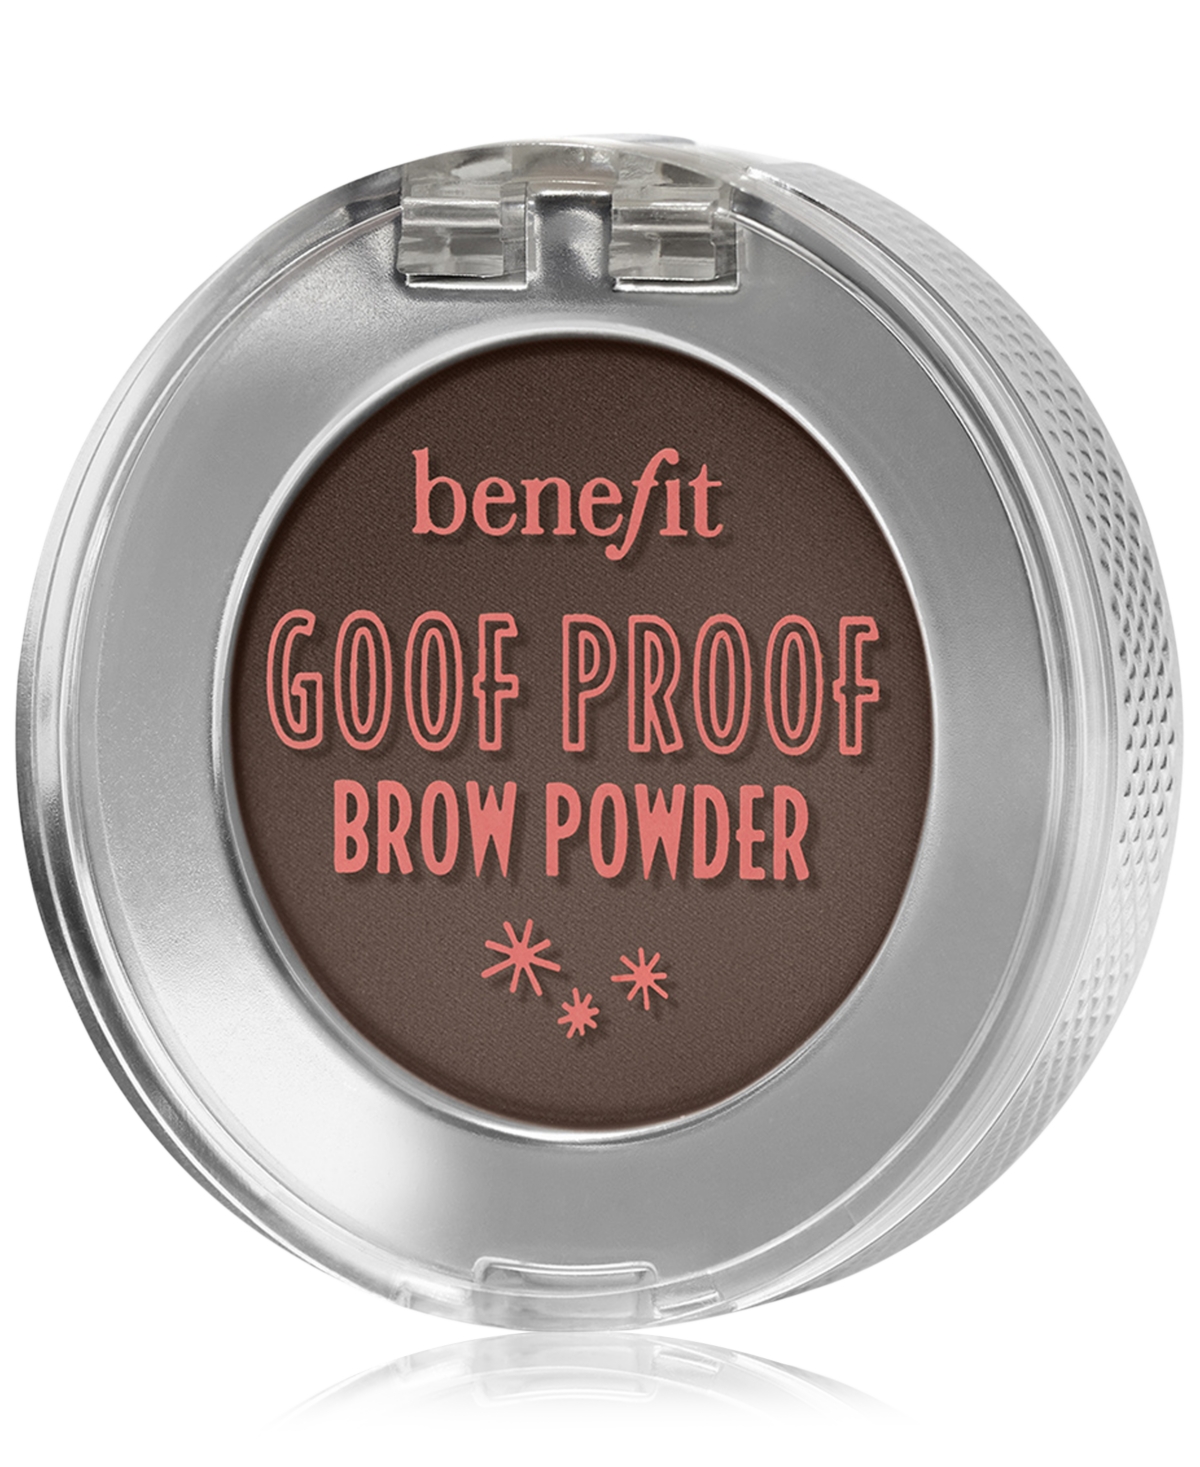 Benefit Cosmetics Goof Proof Brow Powder In - Warm Deep Brown